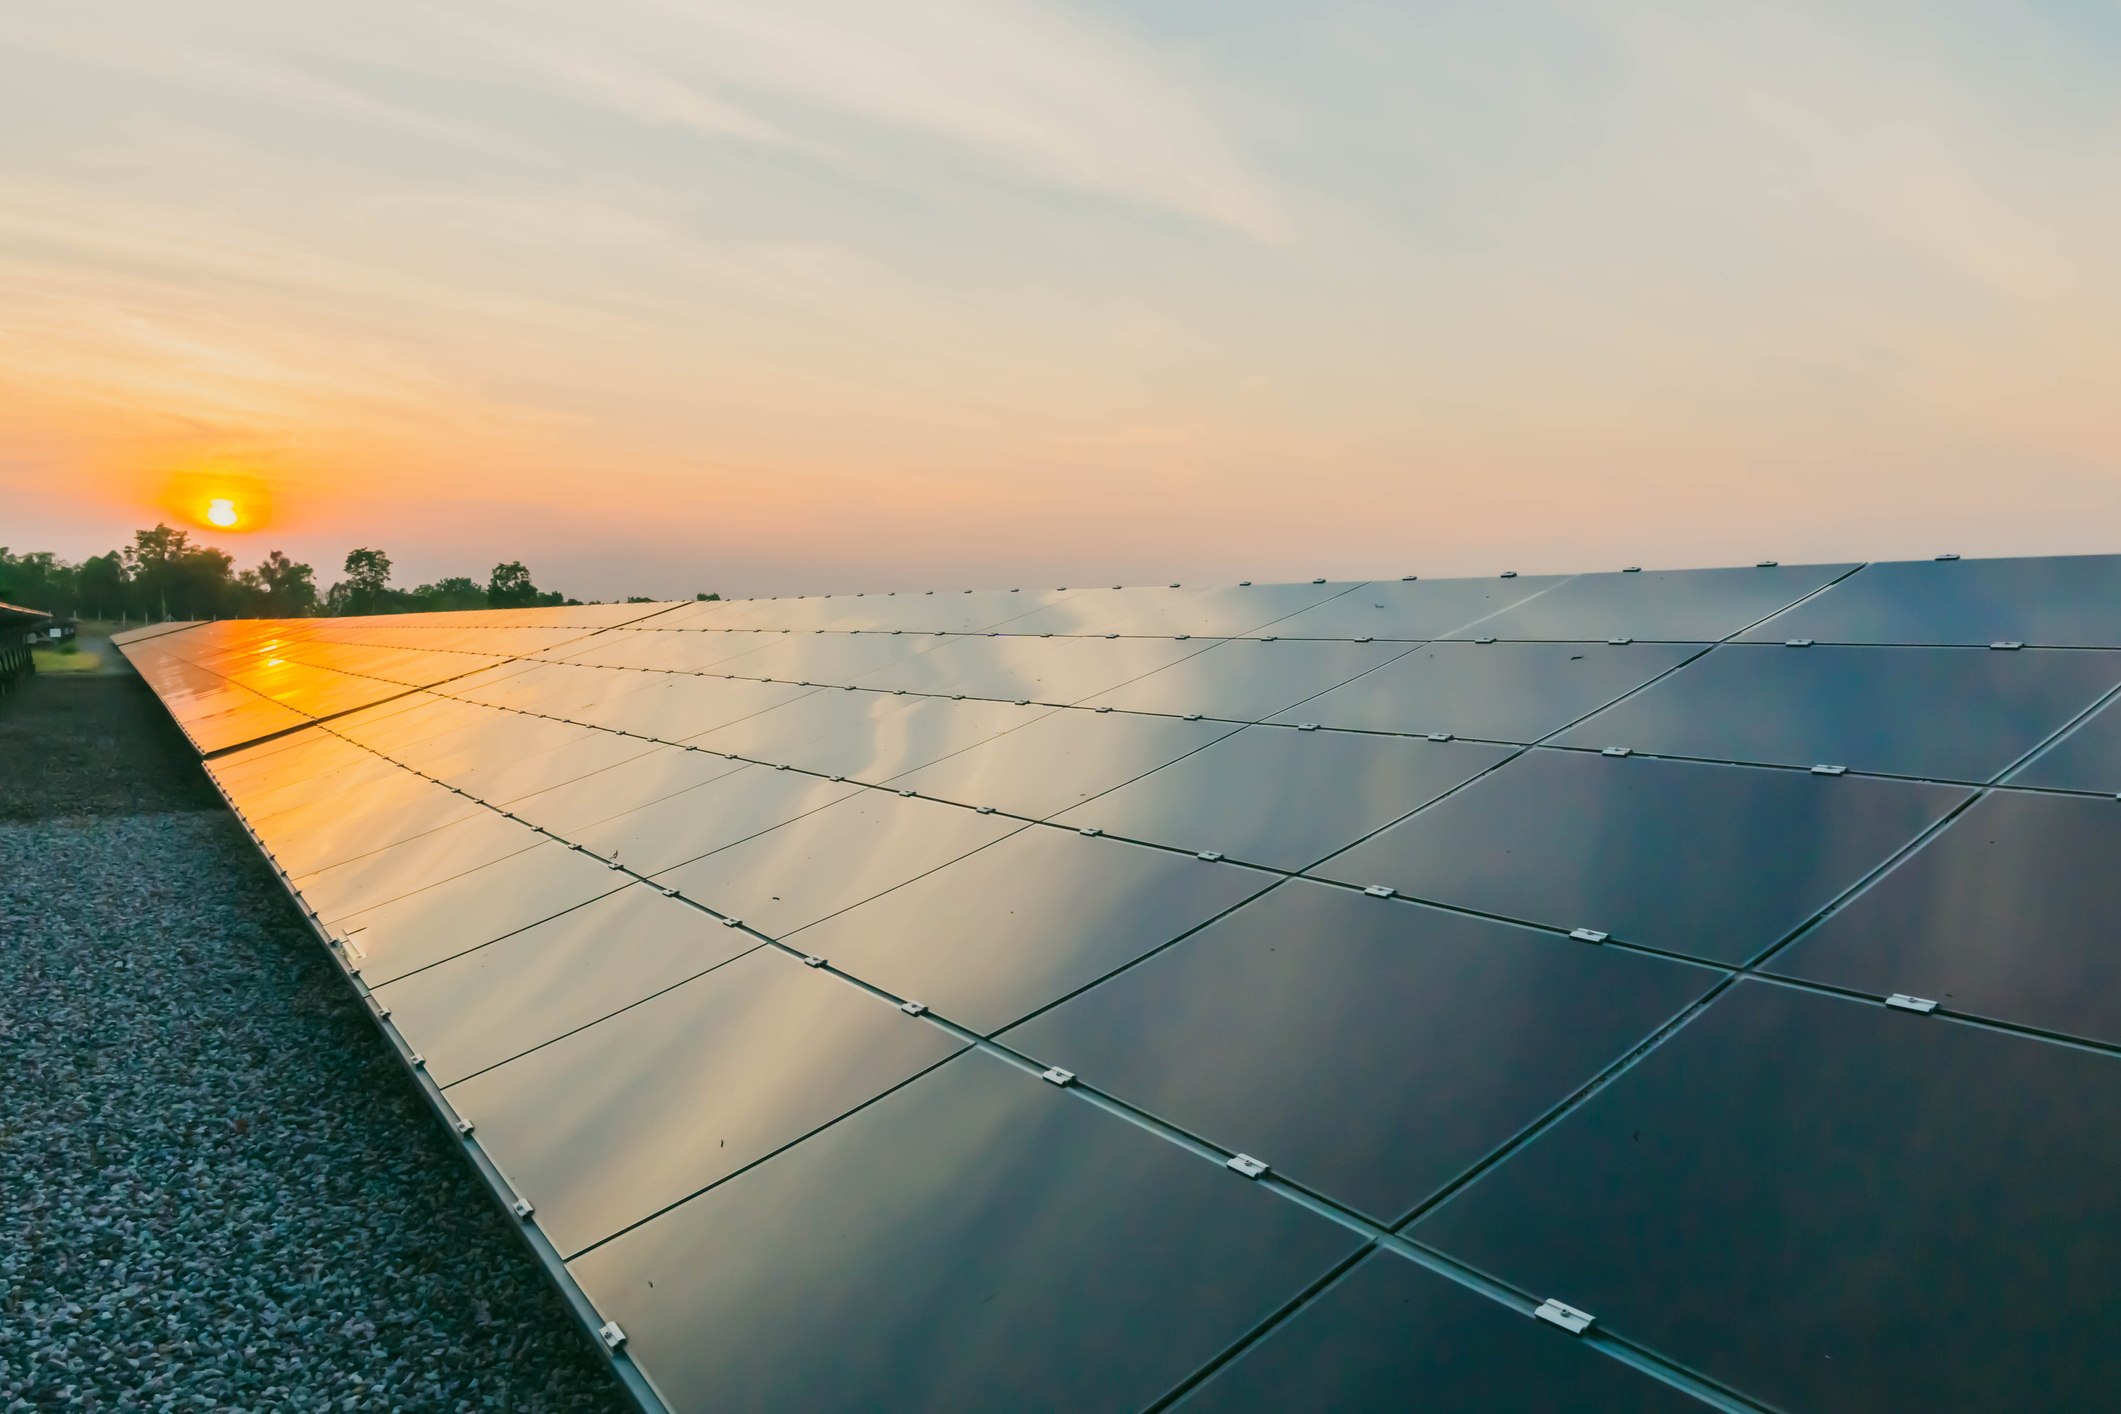 Perovskite solar cell modules show promise as next-gen solar technology